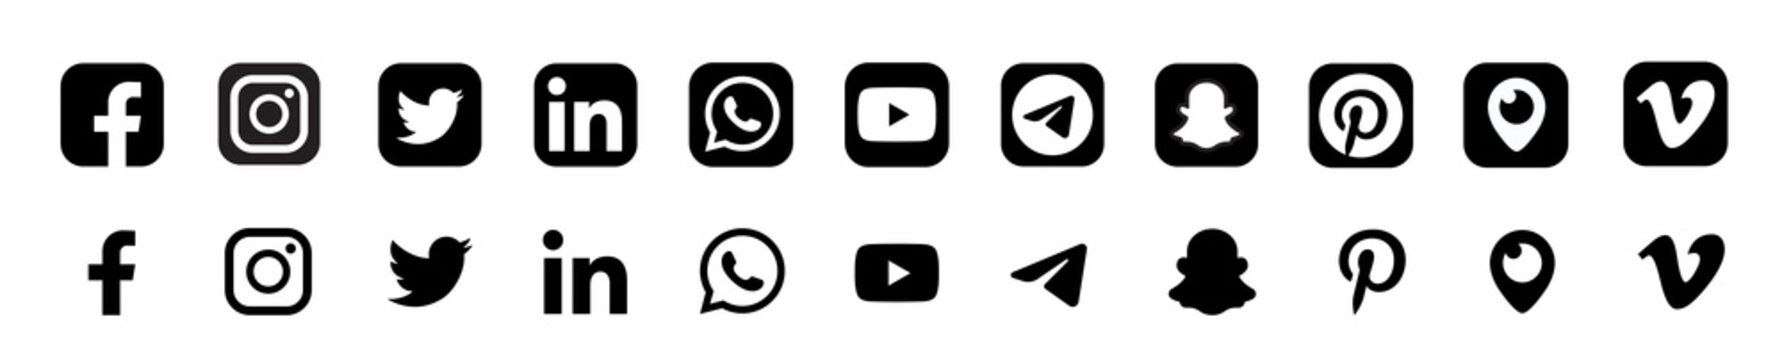 Realistic social media logotype collection: Facebook, instagram, twitter, youtube, linkedin, snapchat, telegram, pinterest, whatsap, periscope, vimeo. Social media icons. - stock vector editorial.